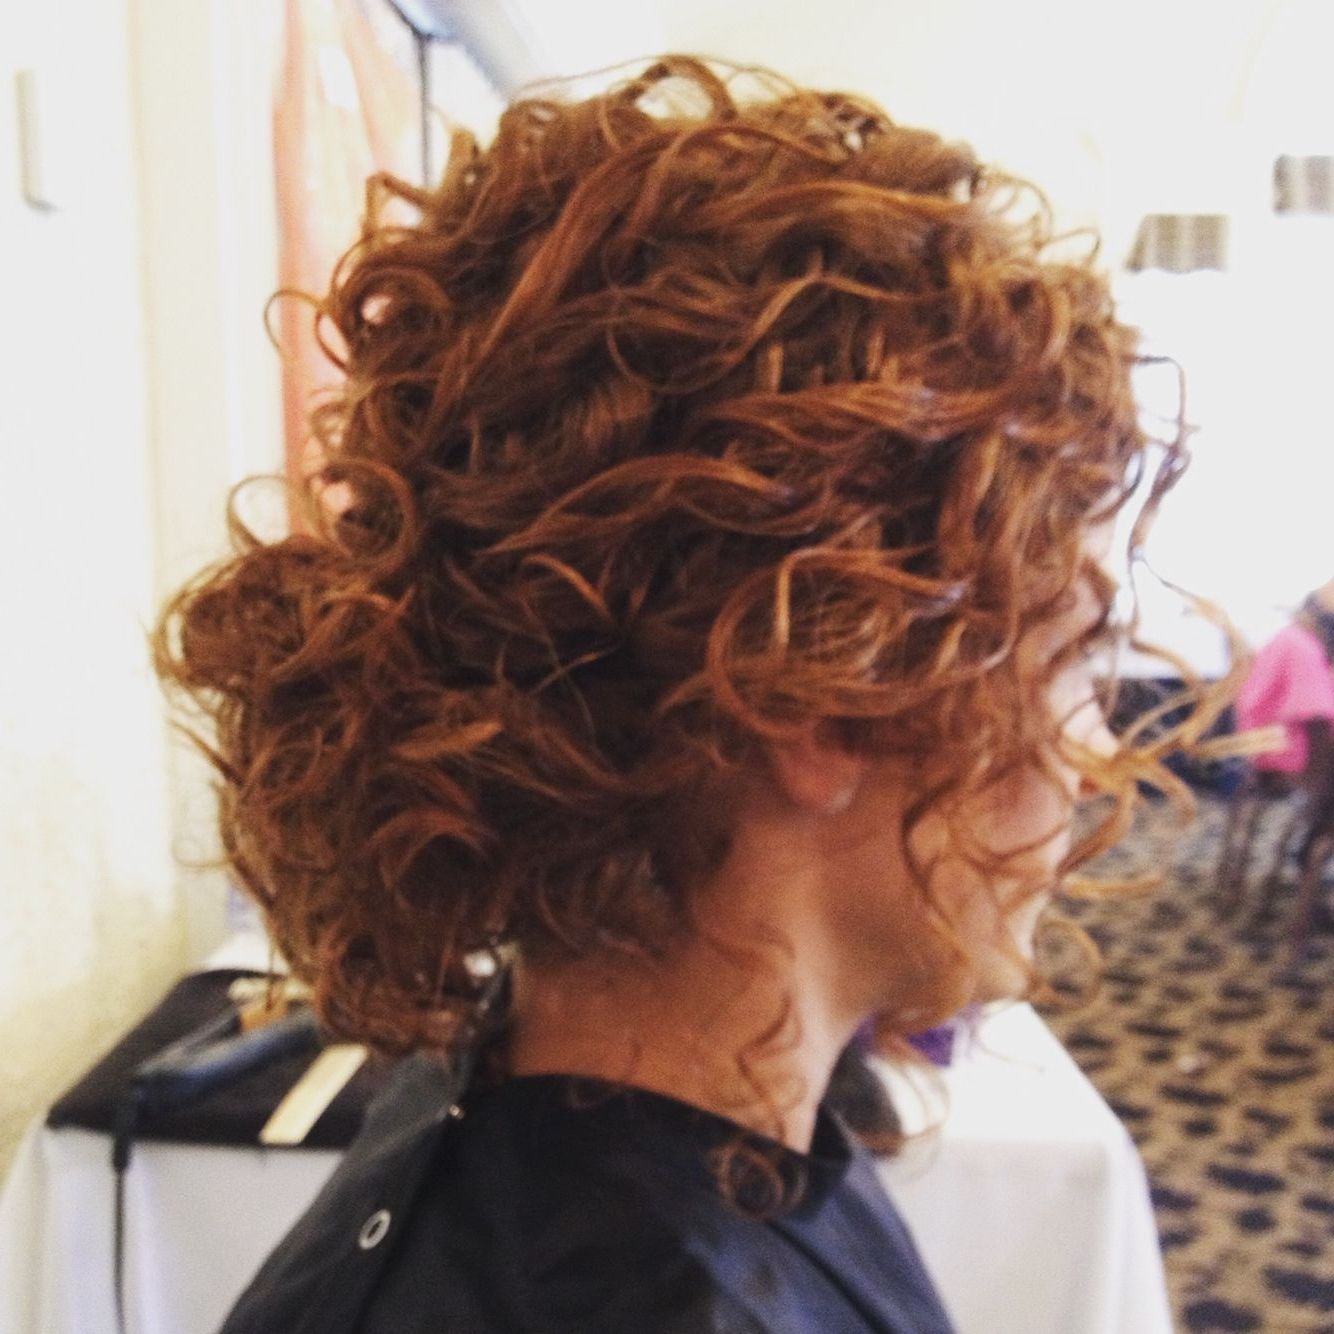 Naturally Curly Hair Low Bun Updo | Hair | Pinterest | Low Bun Updo For Diy Updos For Curly Hair (View 8 of 15)